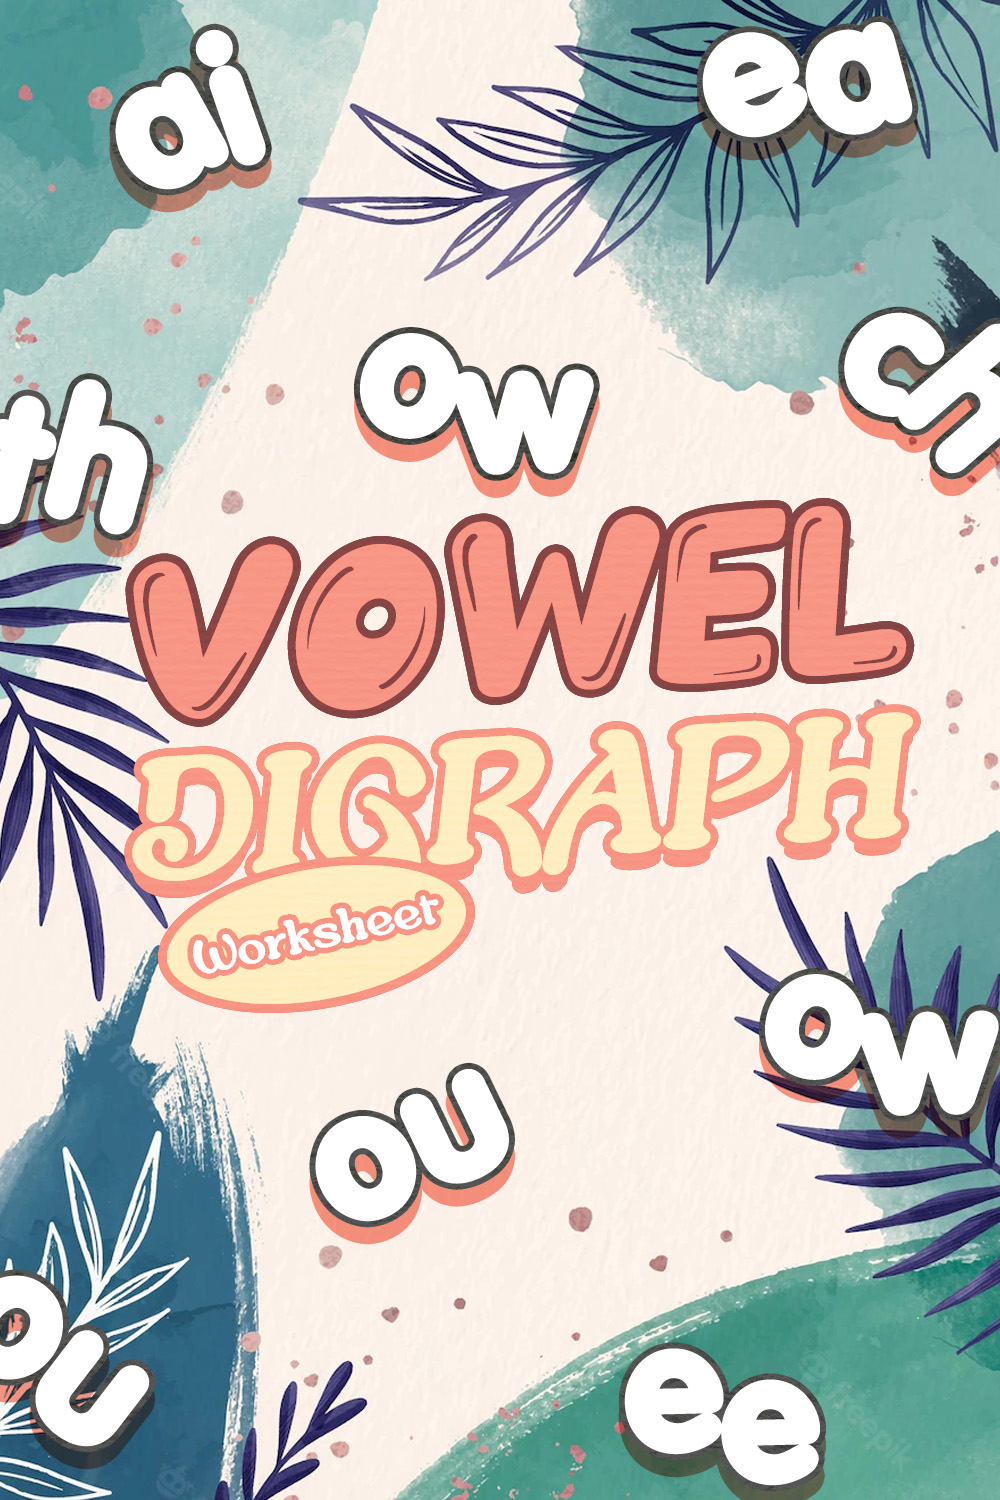 16 Images of Vowel Digraph Worksheets